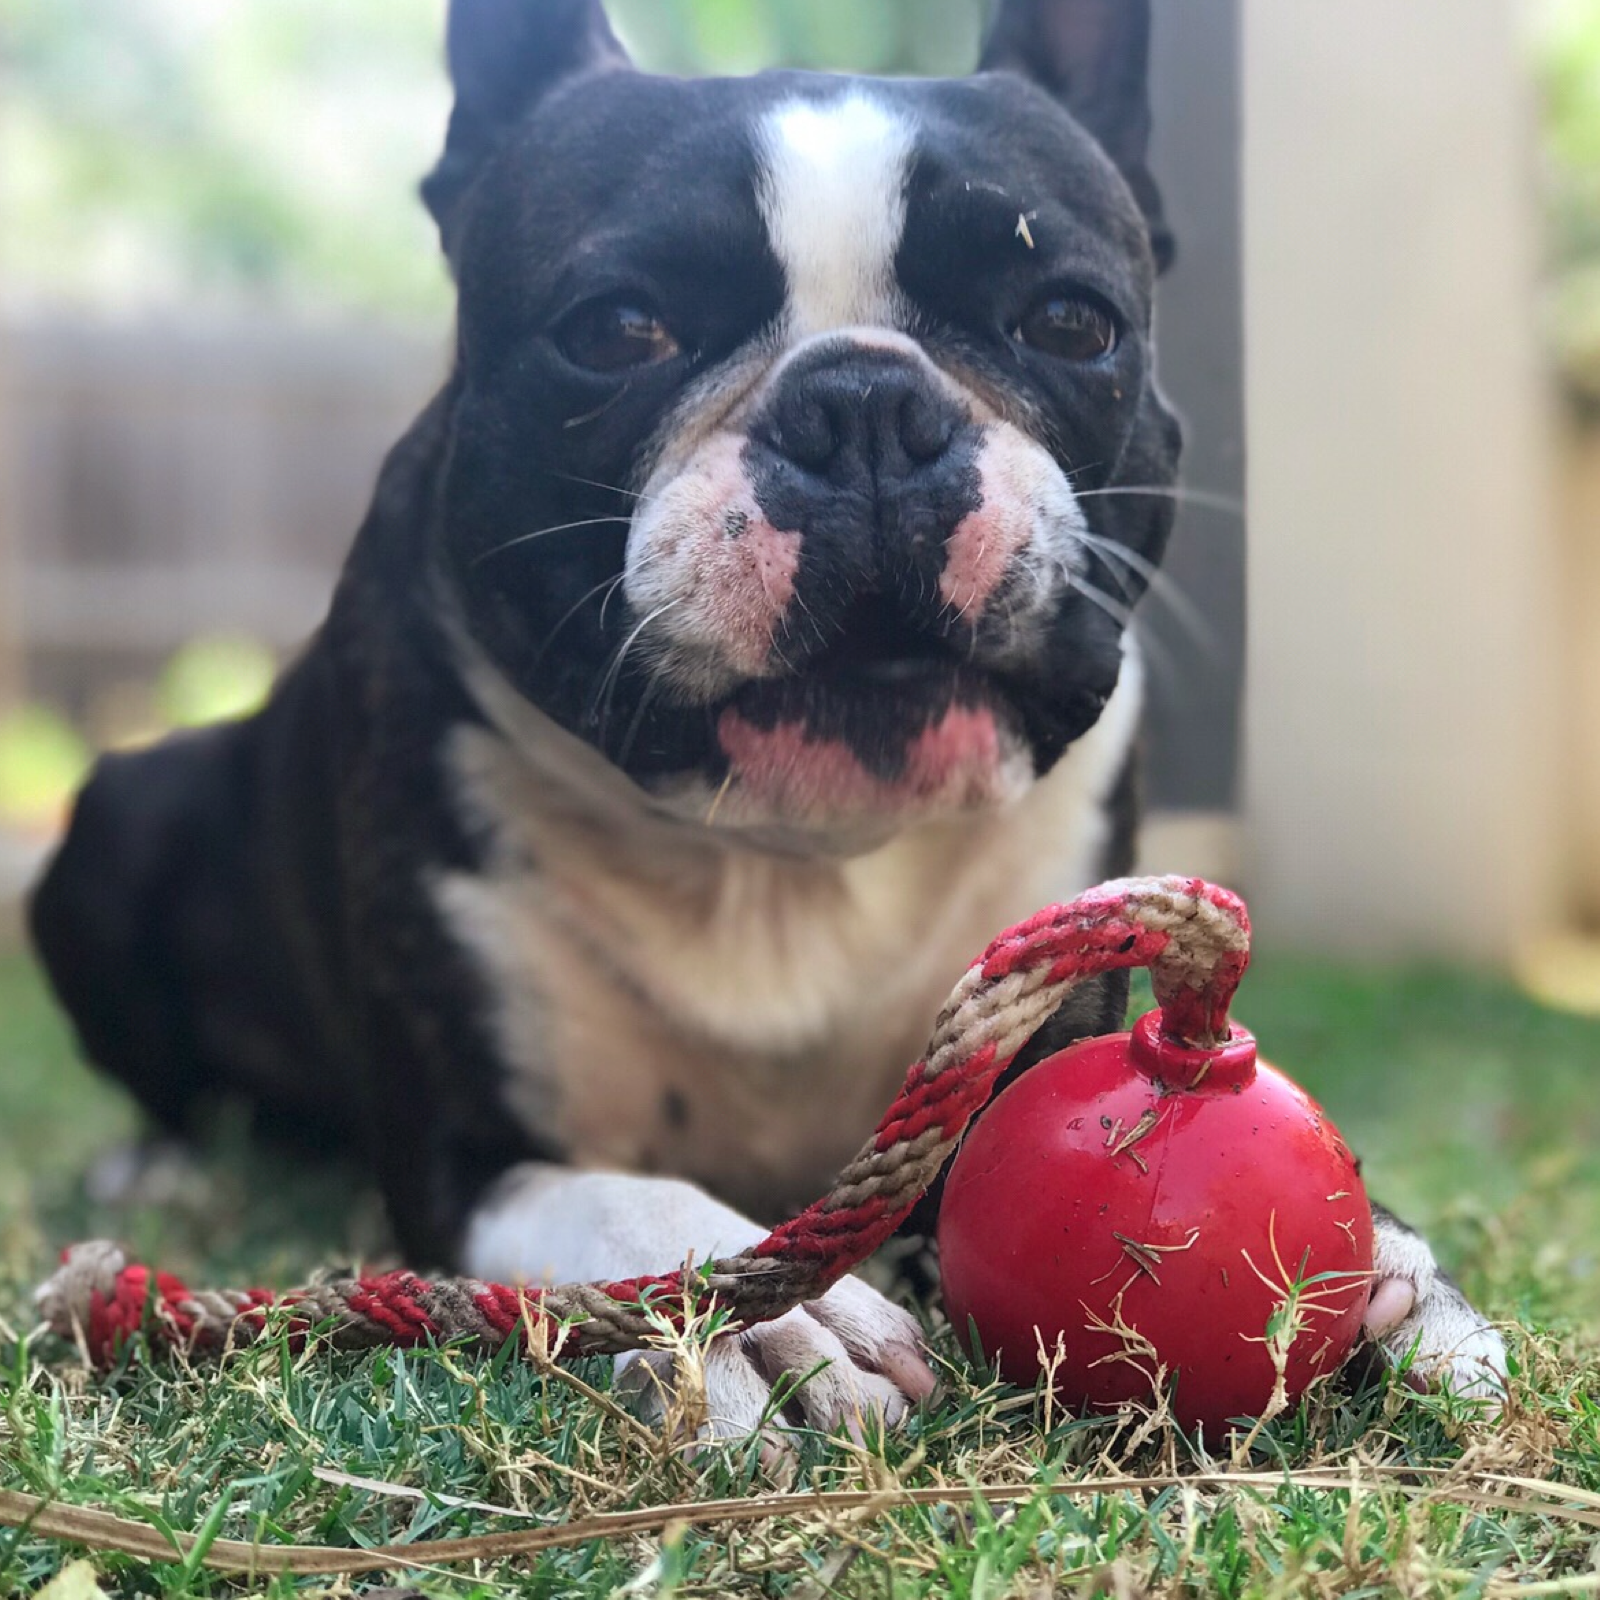 ROVER PET PRODUCTS - Cherry Bomb Enrichment Retrieval Toy